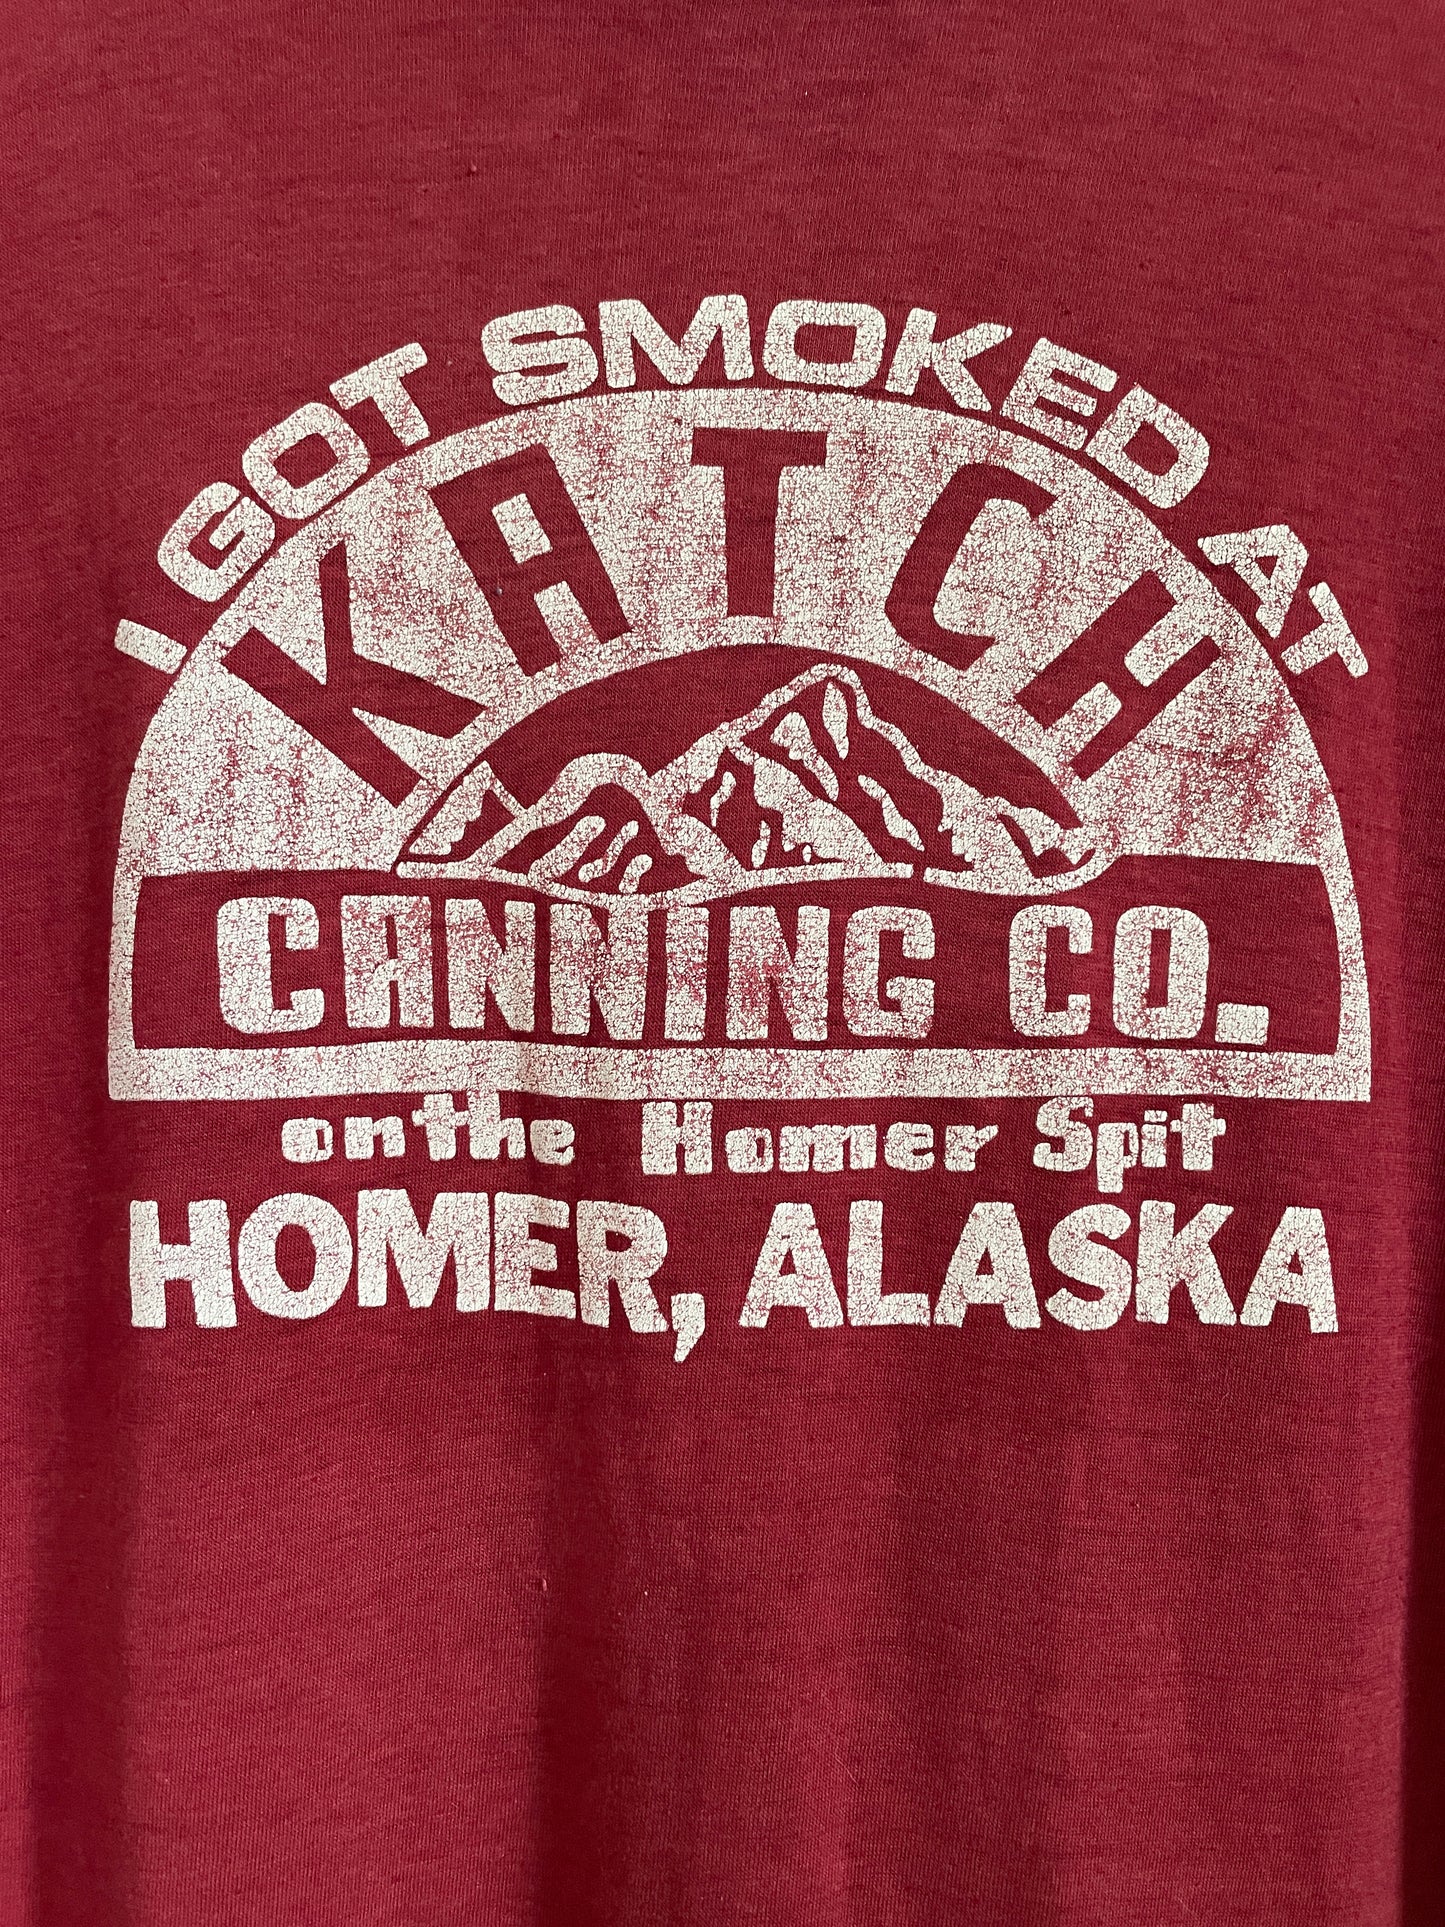 80s Katch Canning Co, Homer Alaska Tee